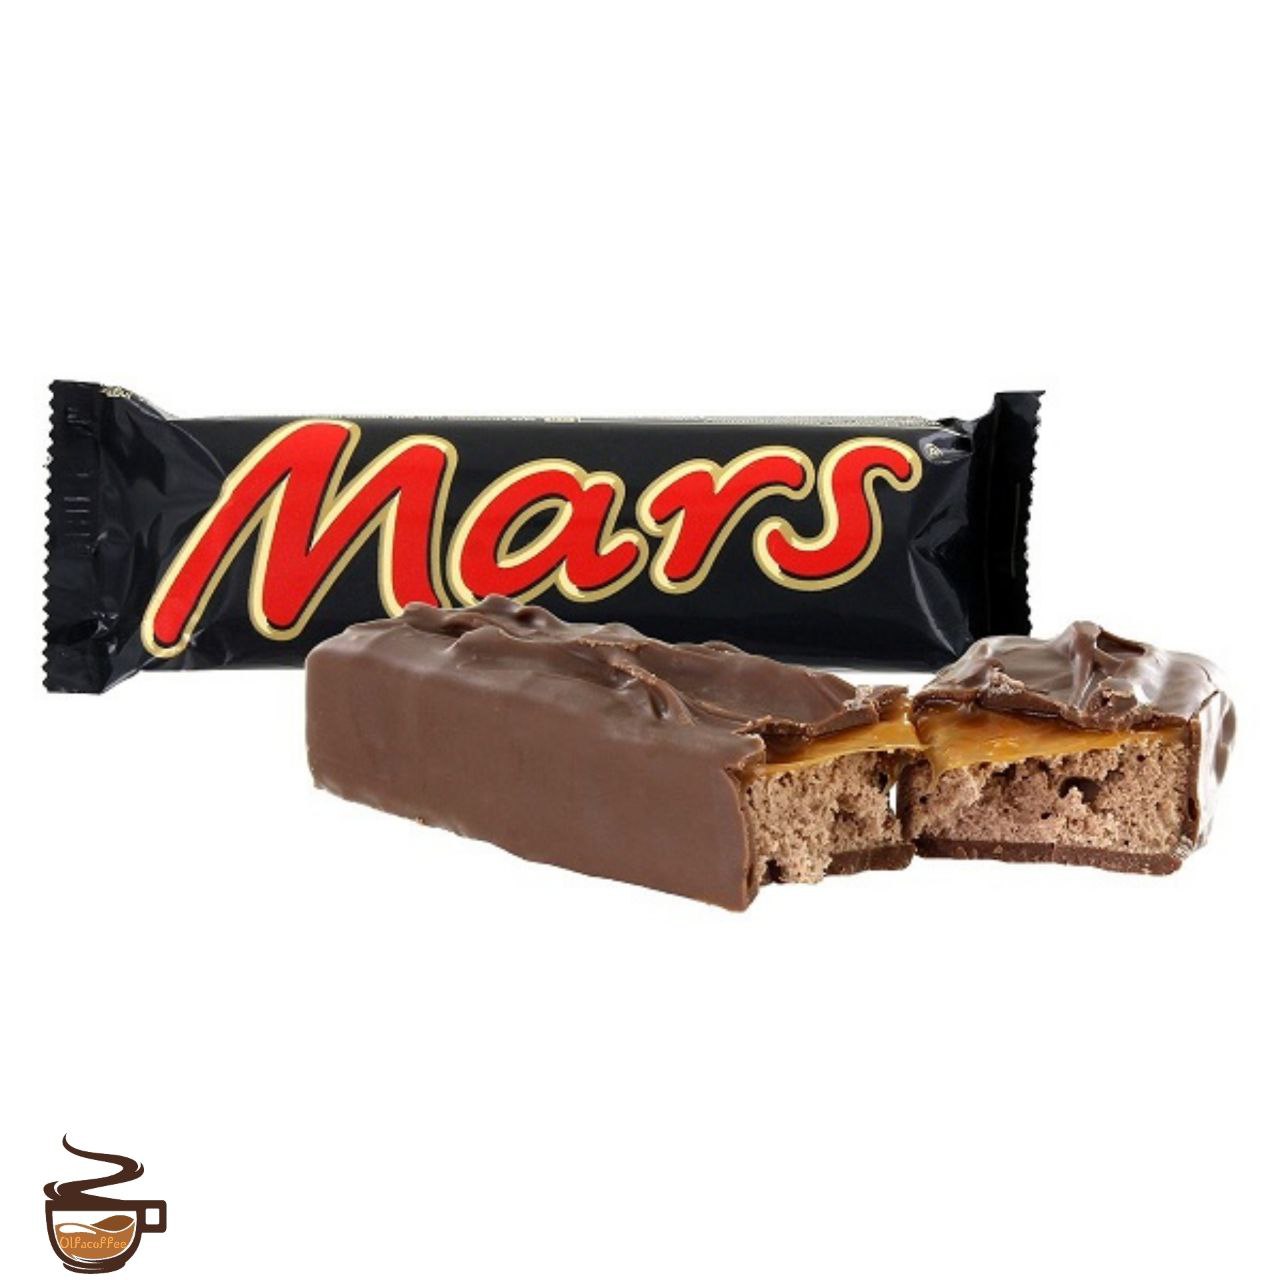 شکلات مارس mars